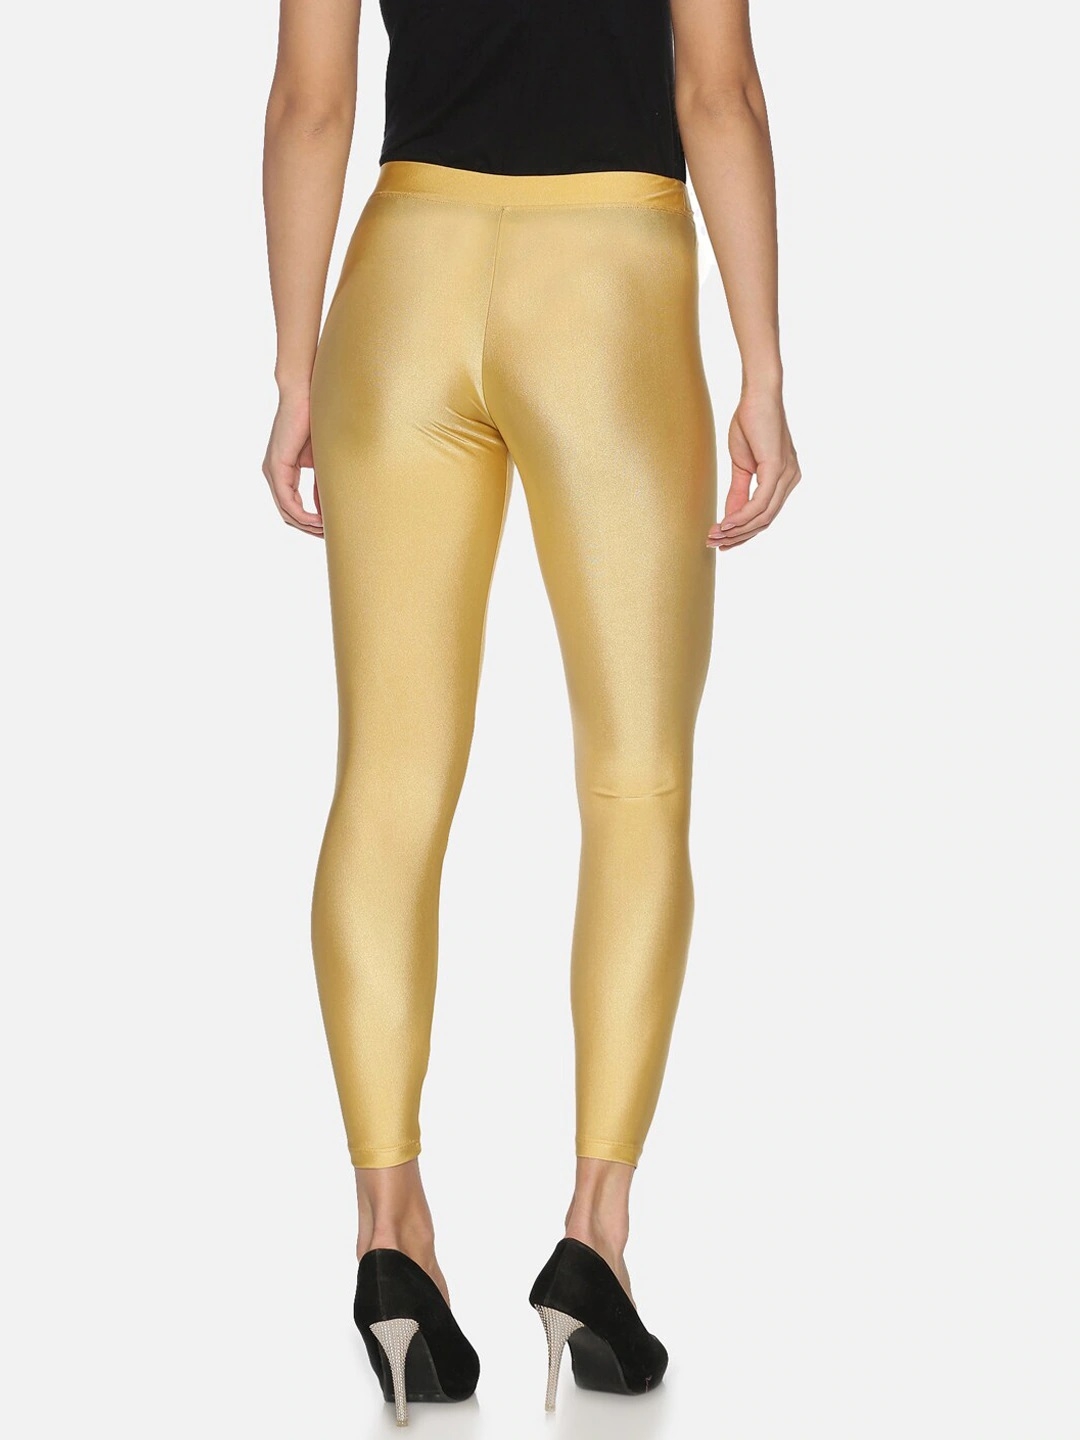 Spanx Shimmer Leggings Black Gold High Rise Stretch Pull On Size Medium |  eBay